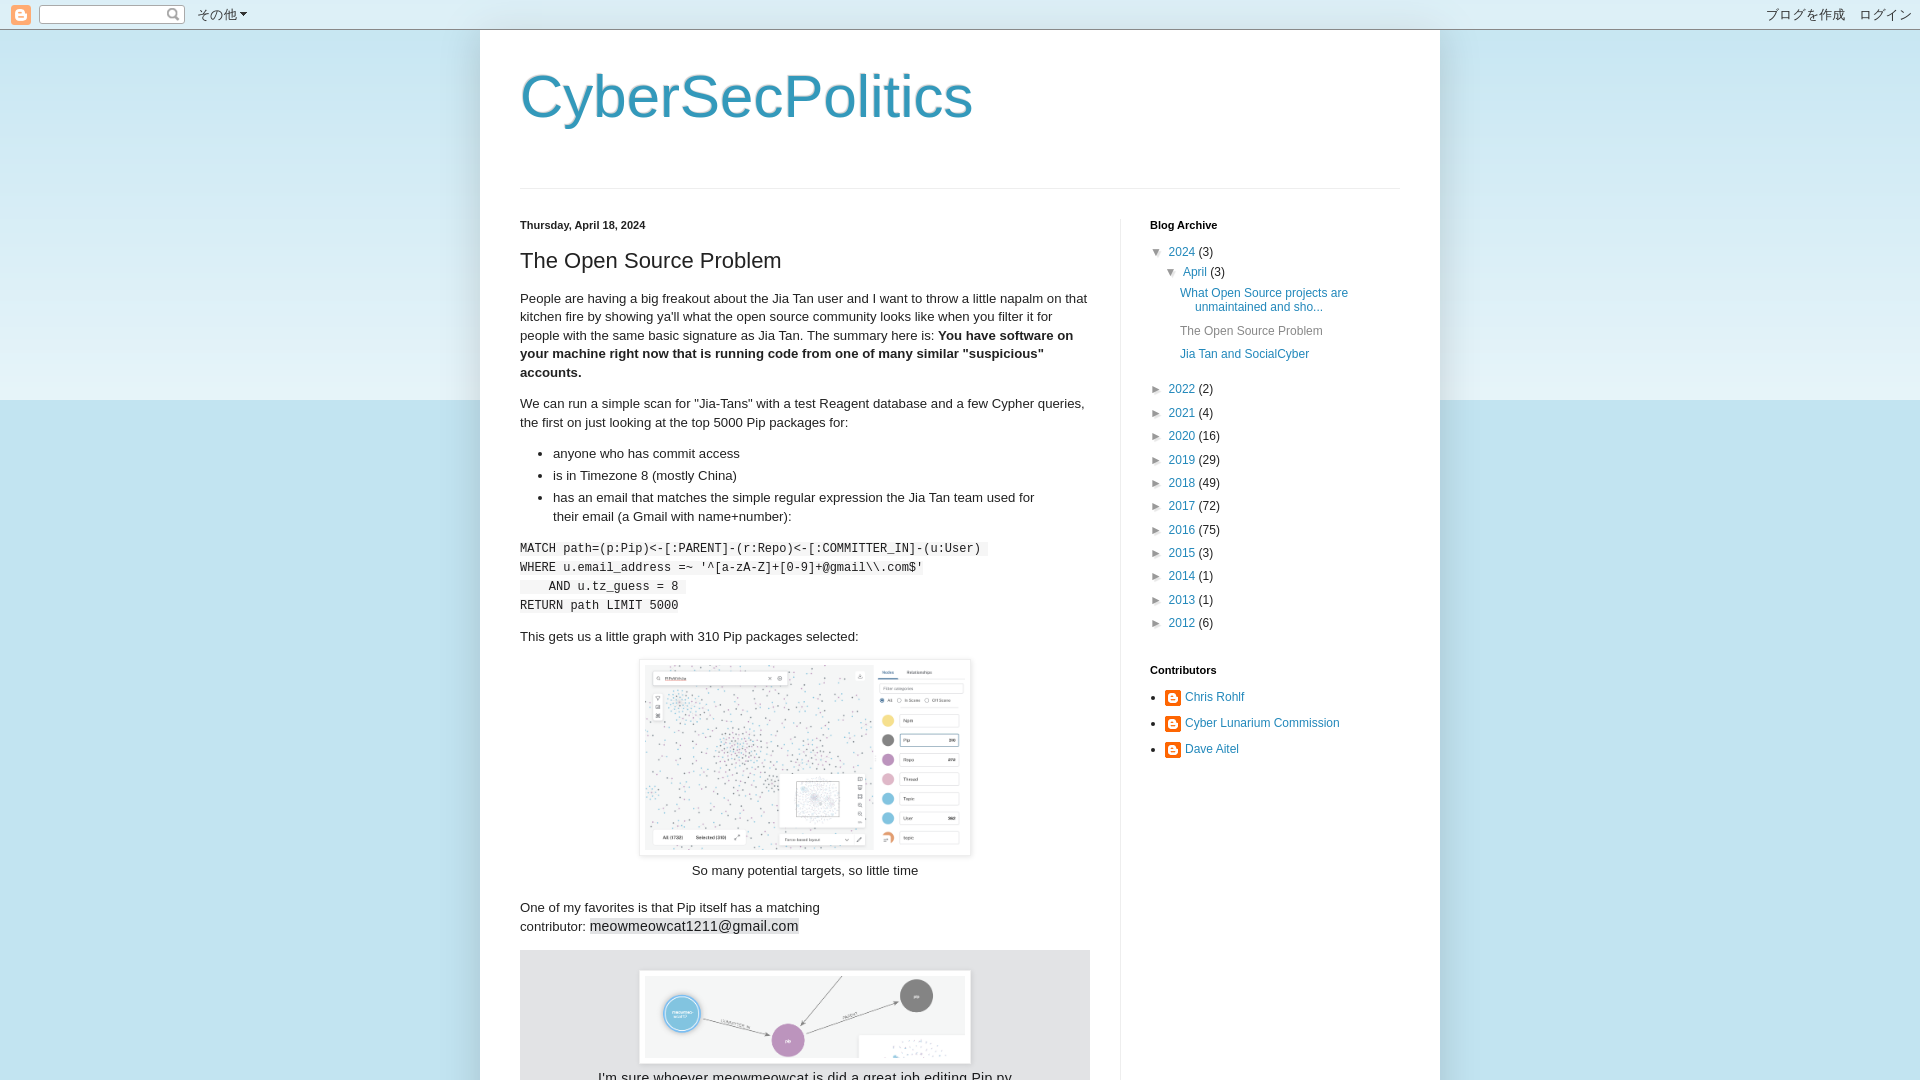 CyberSecPolitics: The Open Source Problem